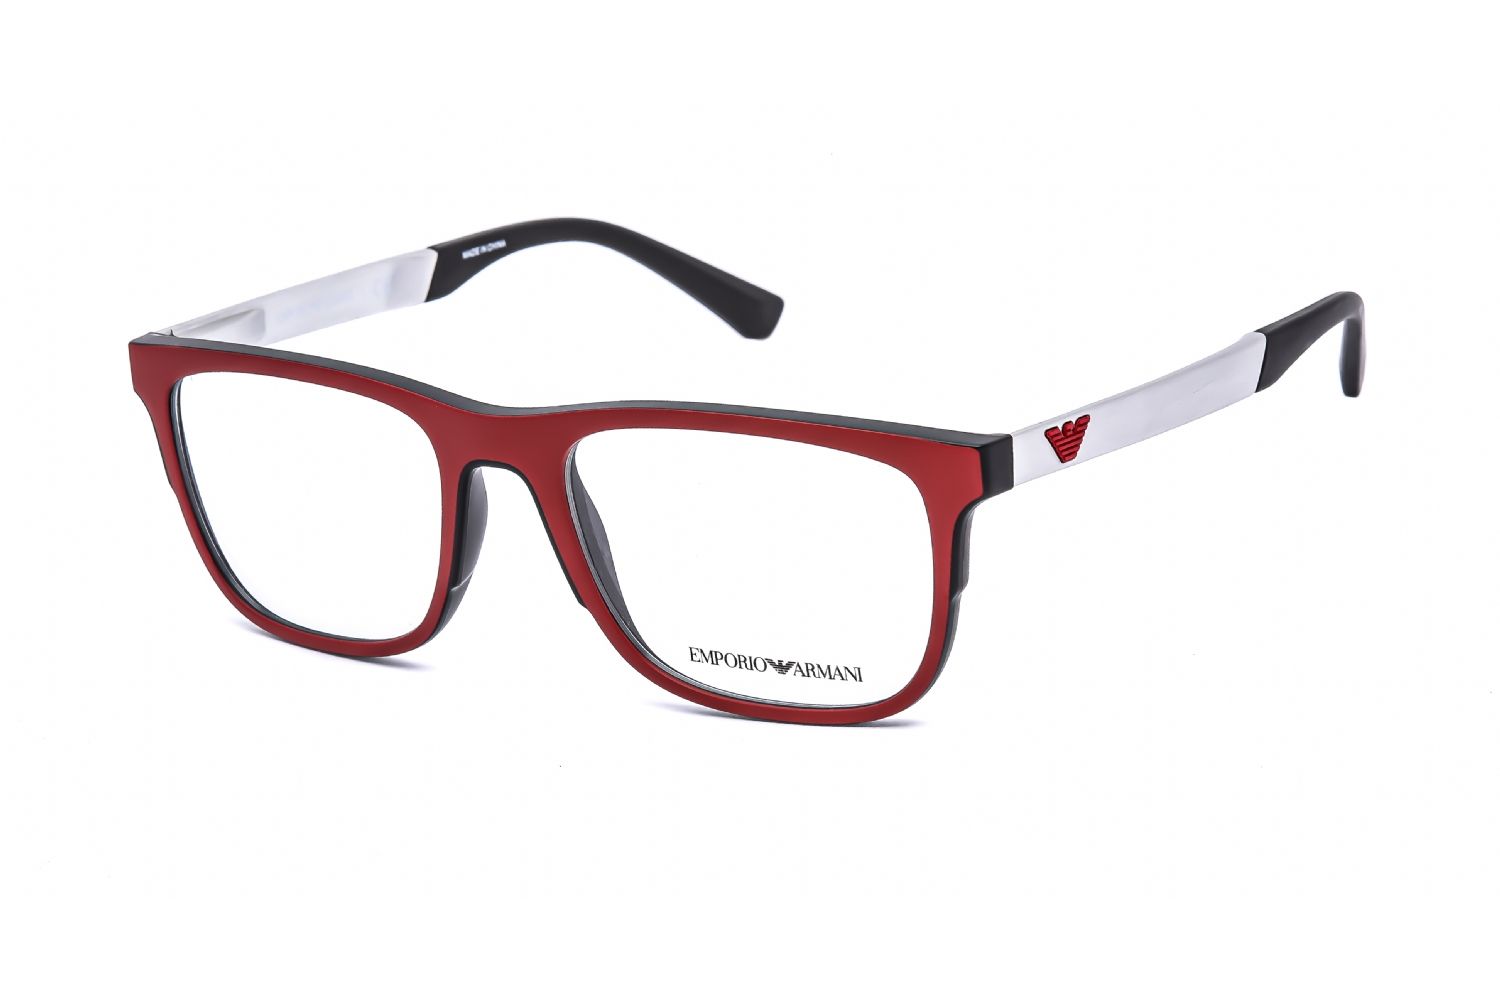 StyleName: Emporio Armani EA3133 Eyeglasses Matte Red/Black / Clear Lens Brand: Emporio Armani Frame Style: Rectangular Frame Material: plastic Color : Matte Red/Black / Clear Lens Women Eyeglasses